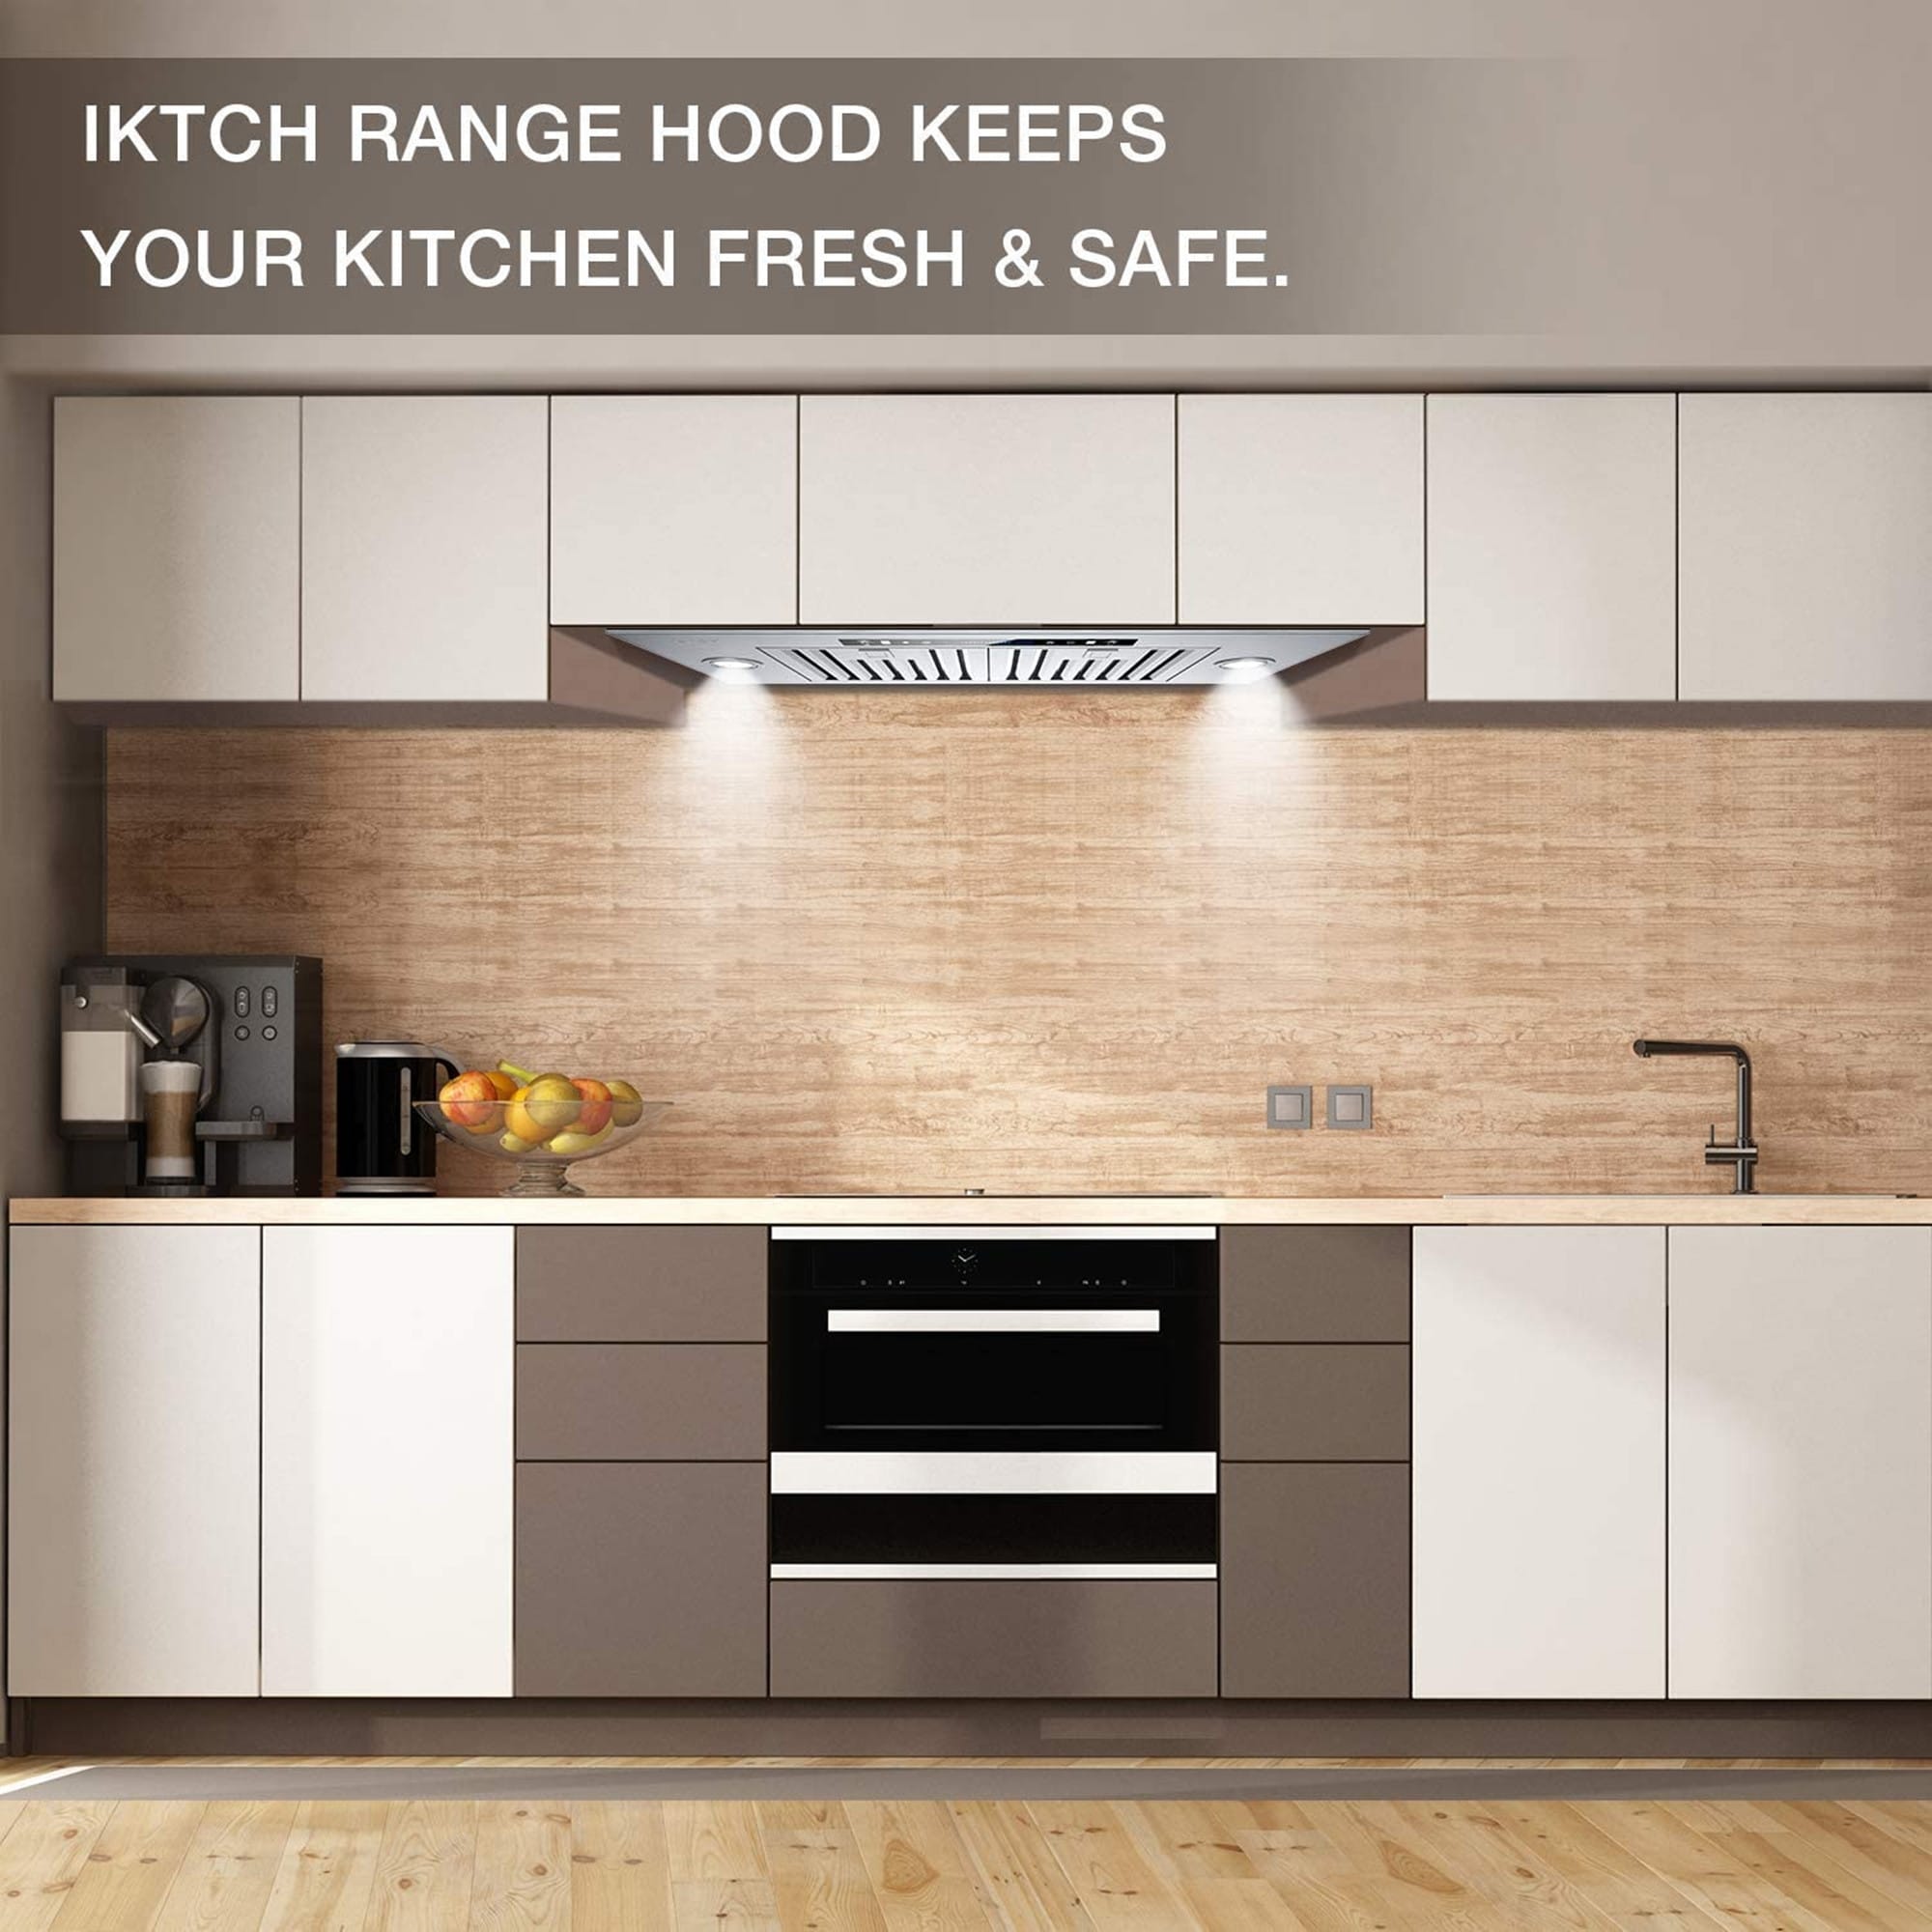 IKTCH 30-inch Ducted Insert Range Hood, 900 CFM Stainless Steel